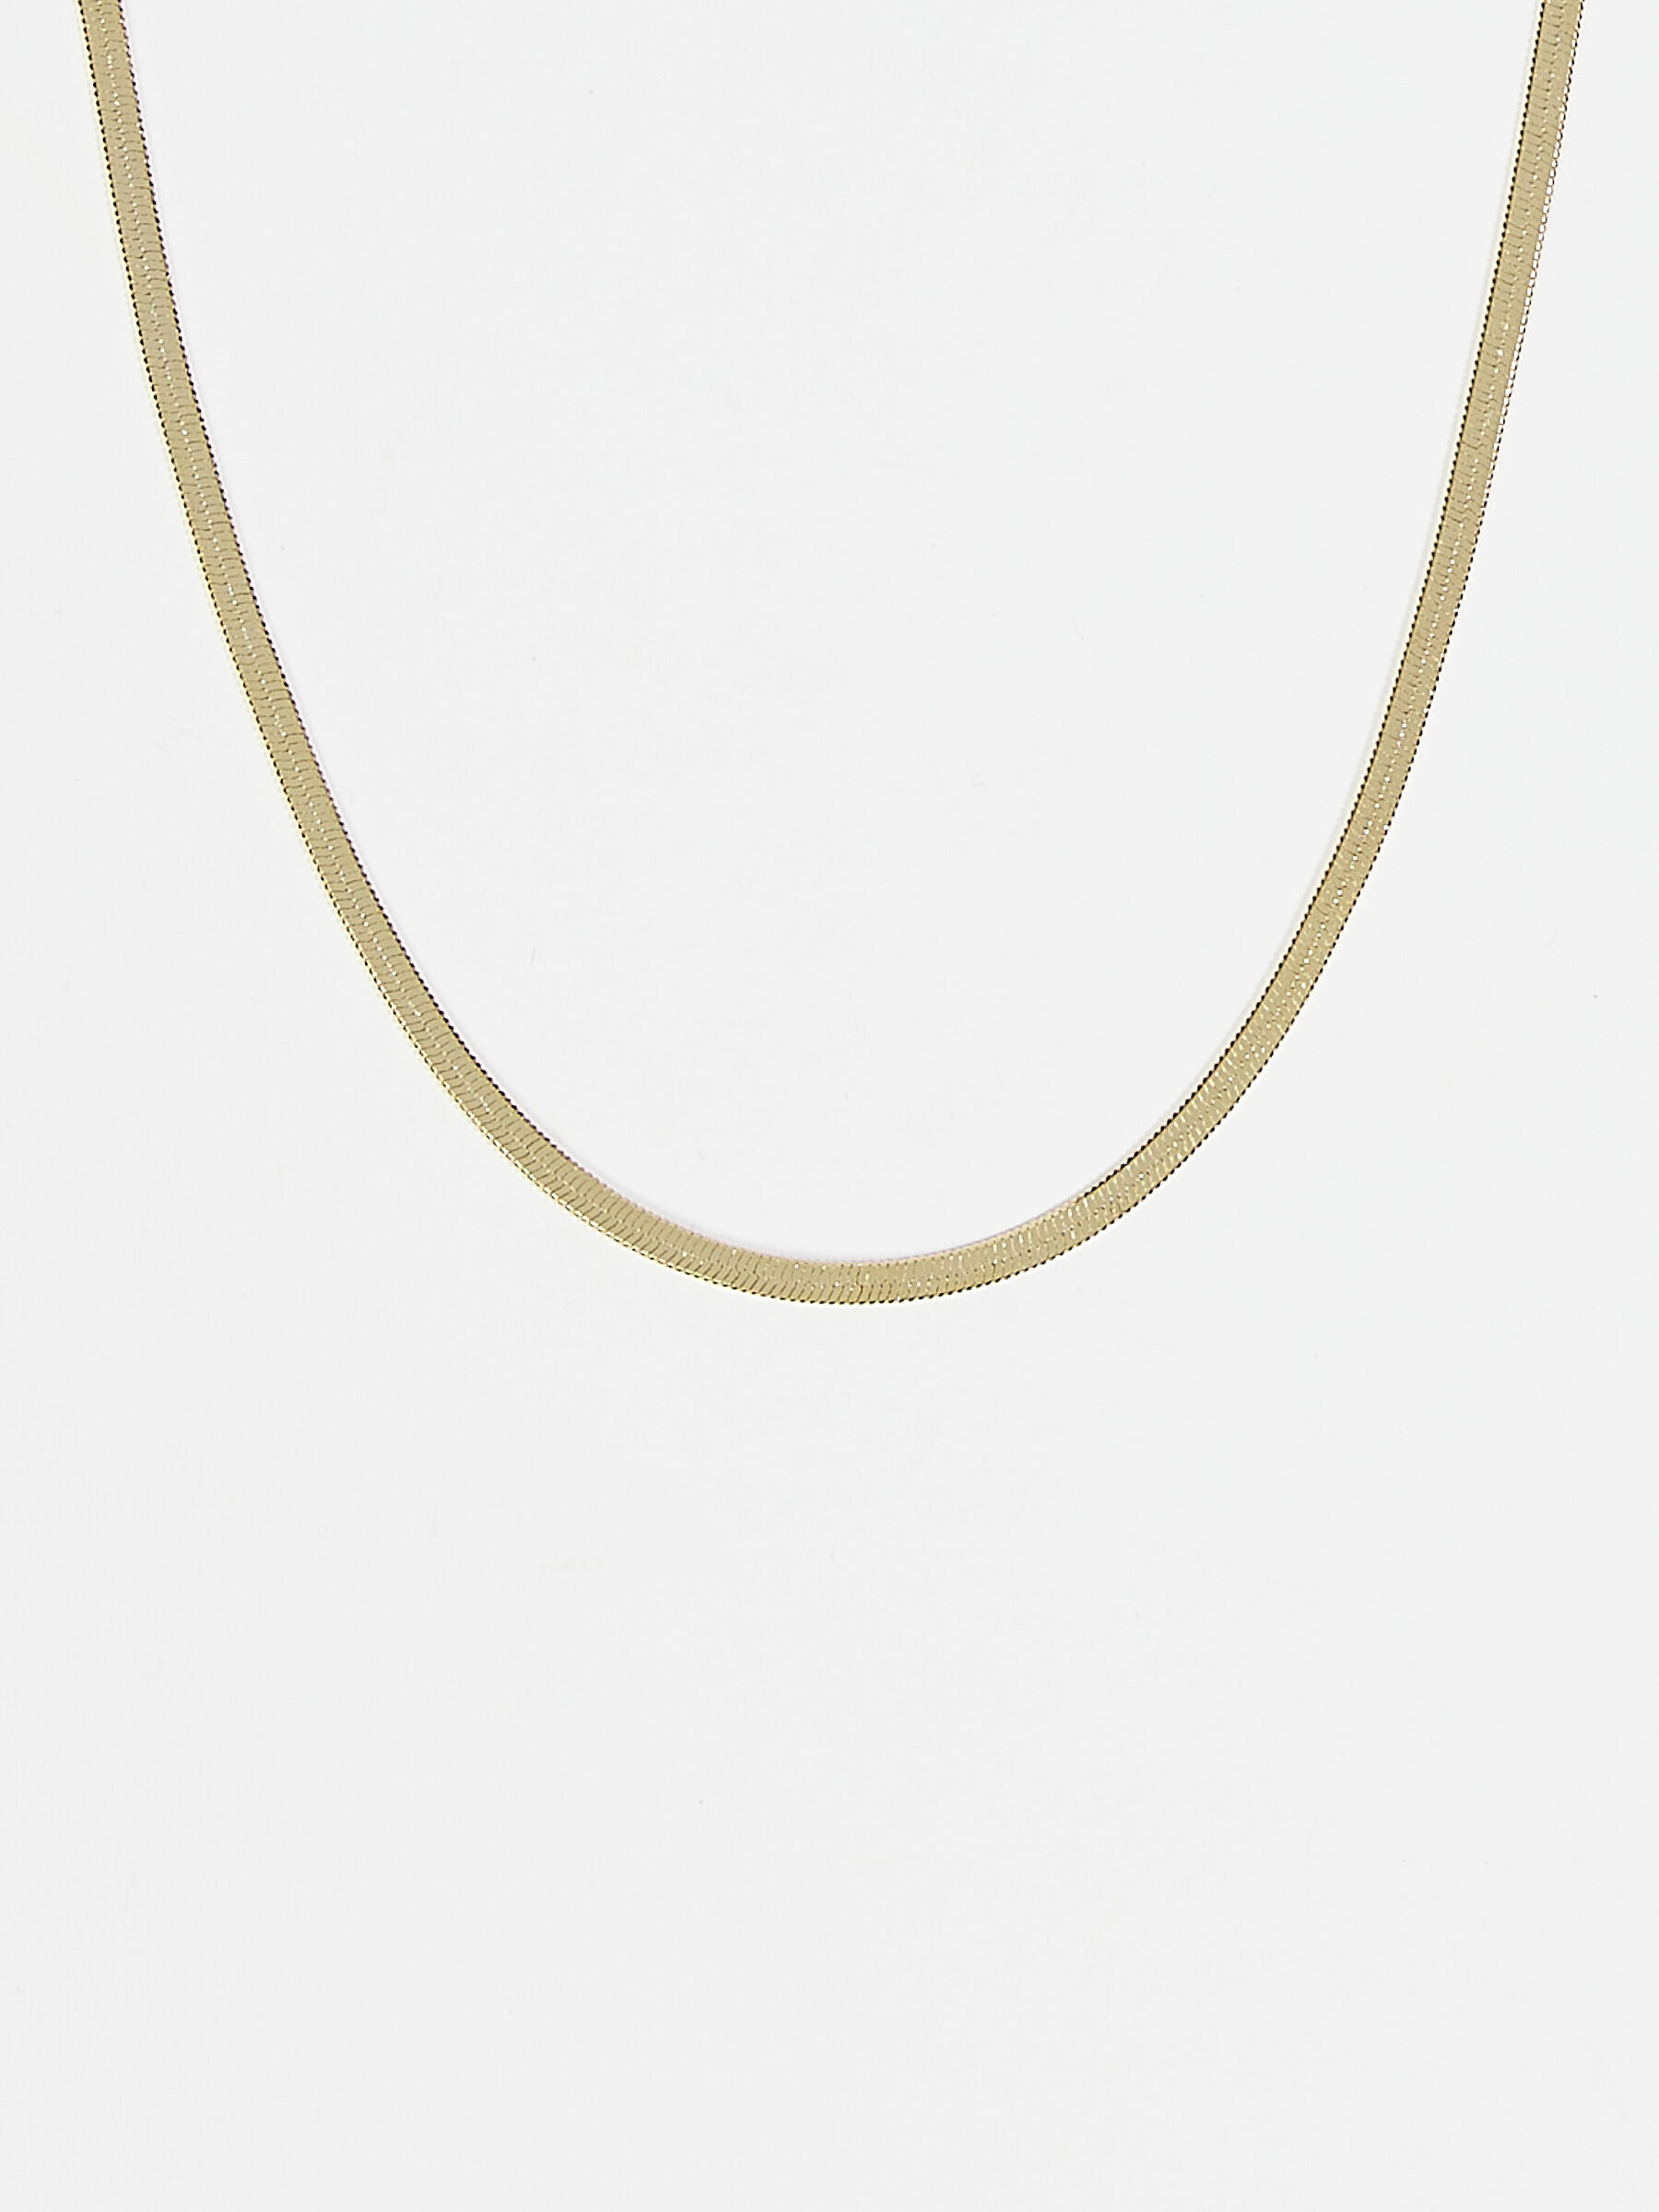 18k Gold Herringbone Necklace